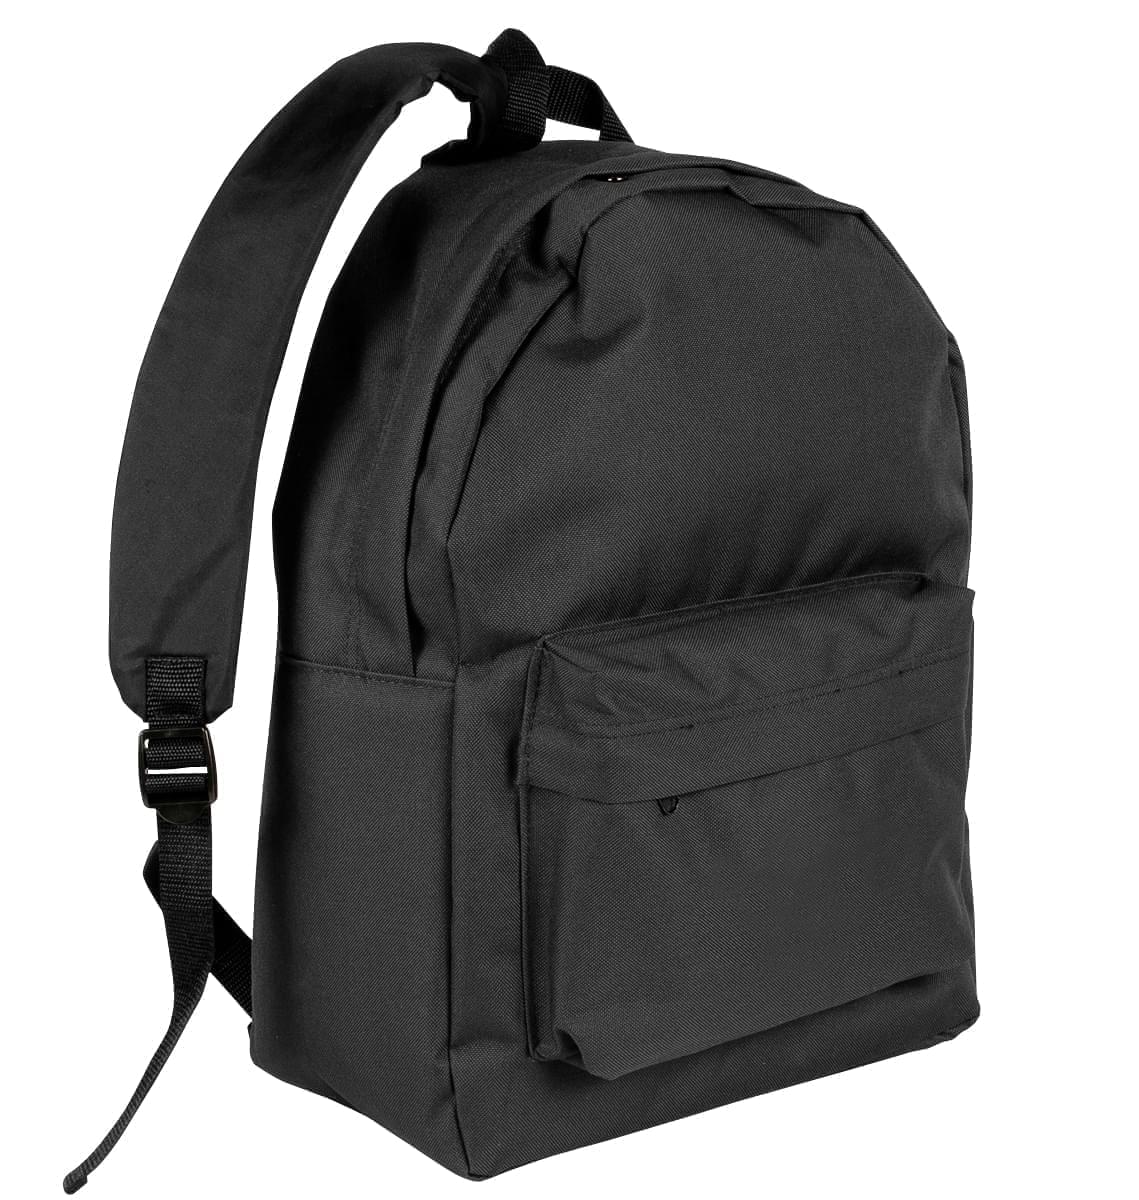 Nylon Poly Backpack Knapsack-Black/Black-USA Made by Unionwear